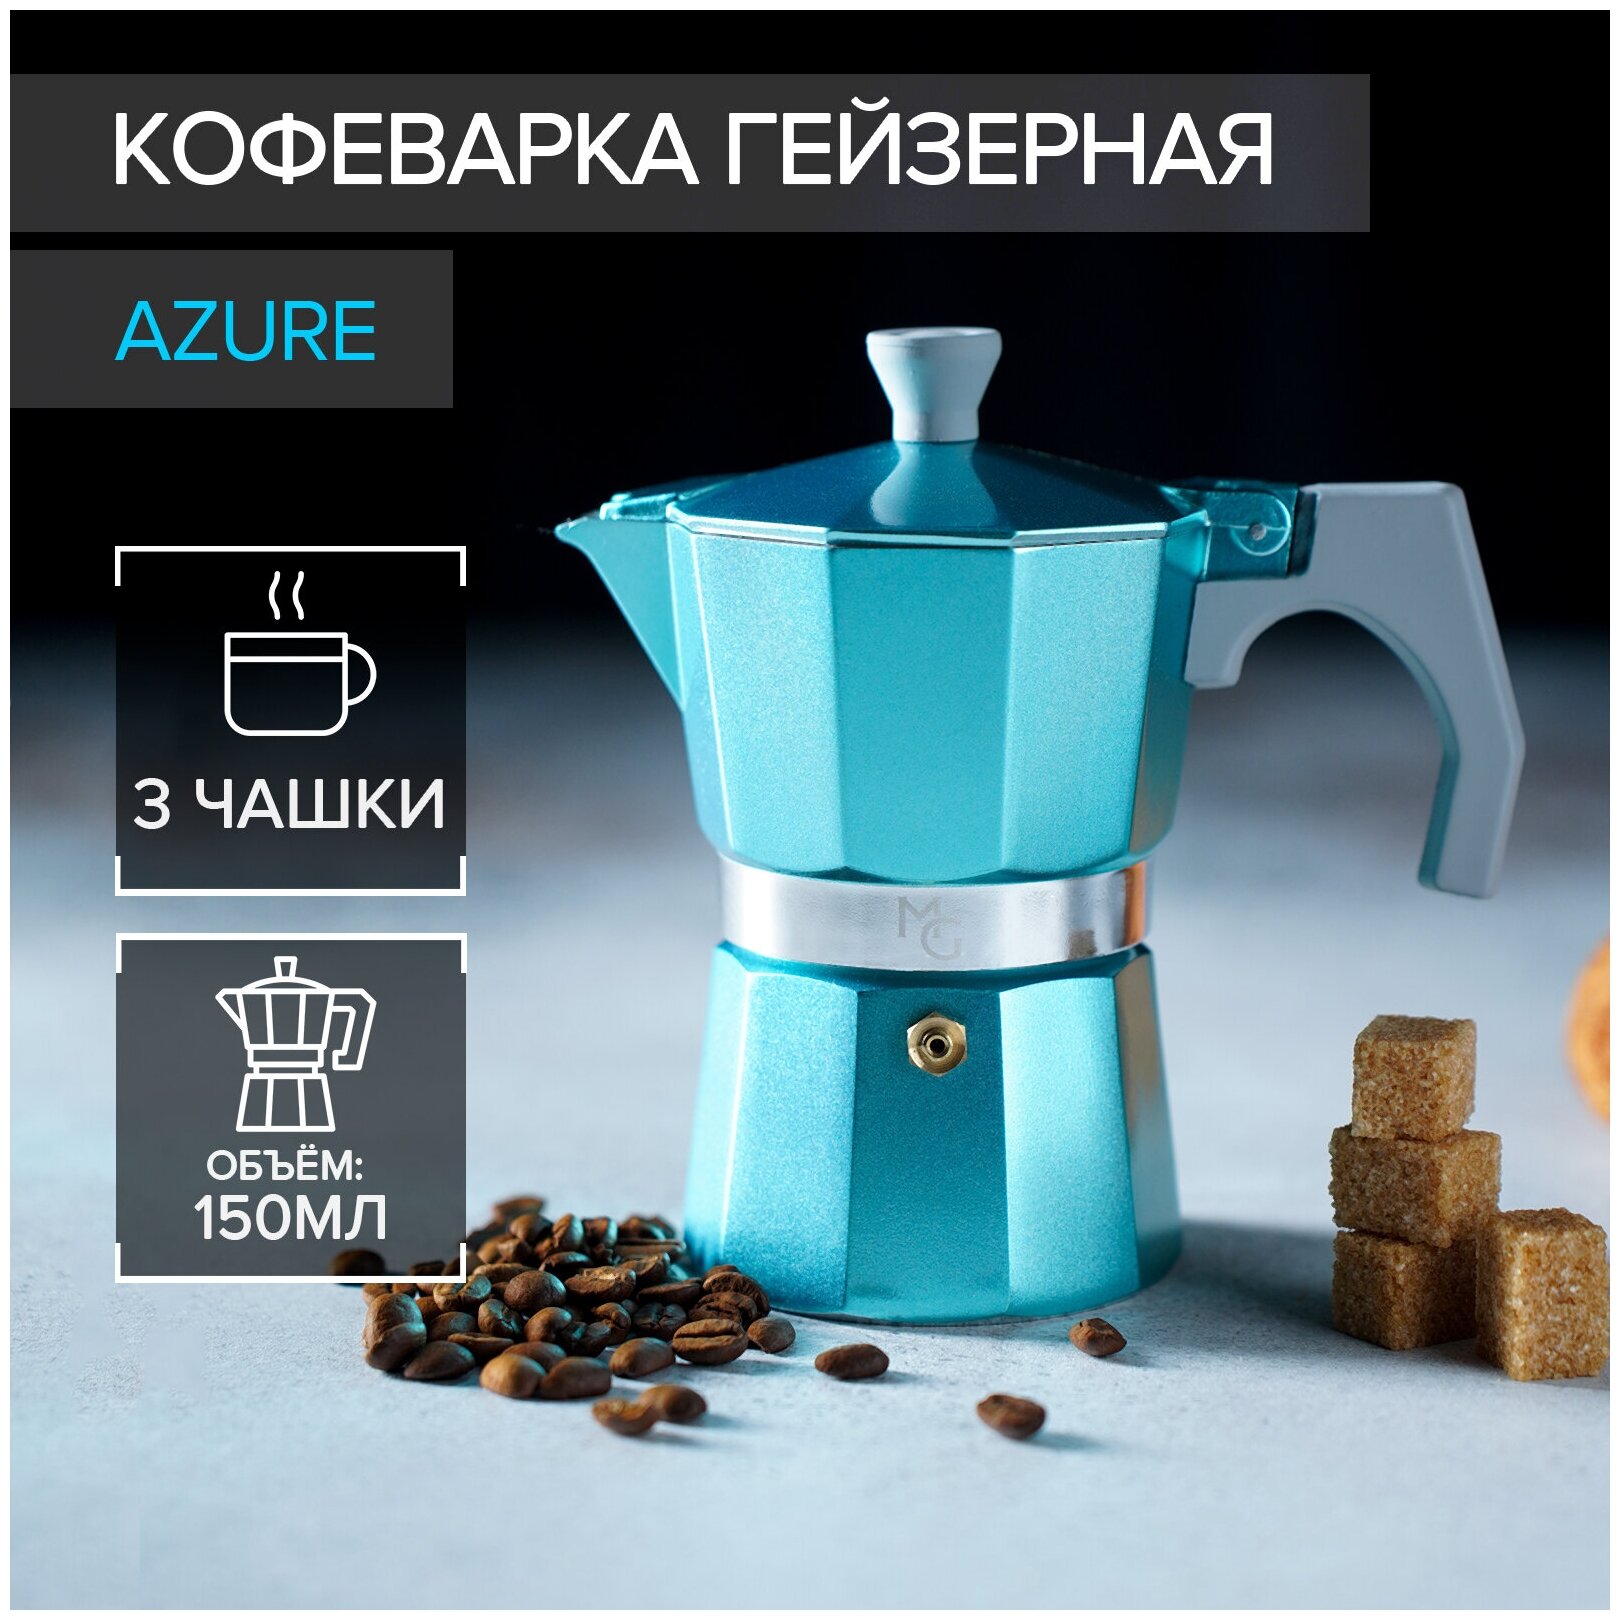 Кофеварка гейзерная Доляна "Azure" на 3 чашки, 150 мл